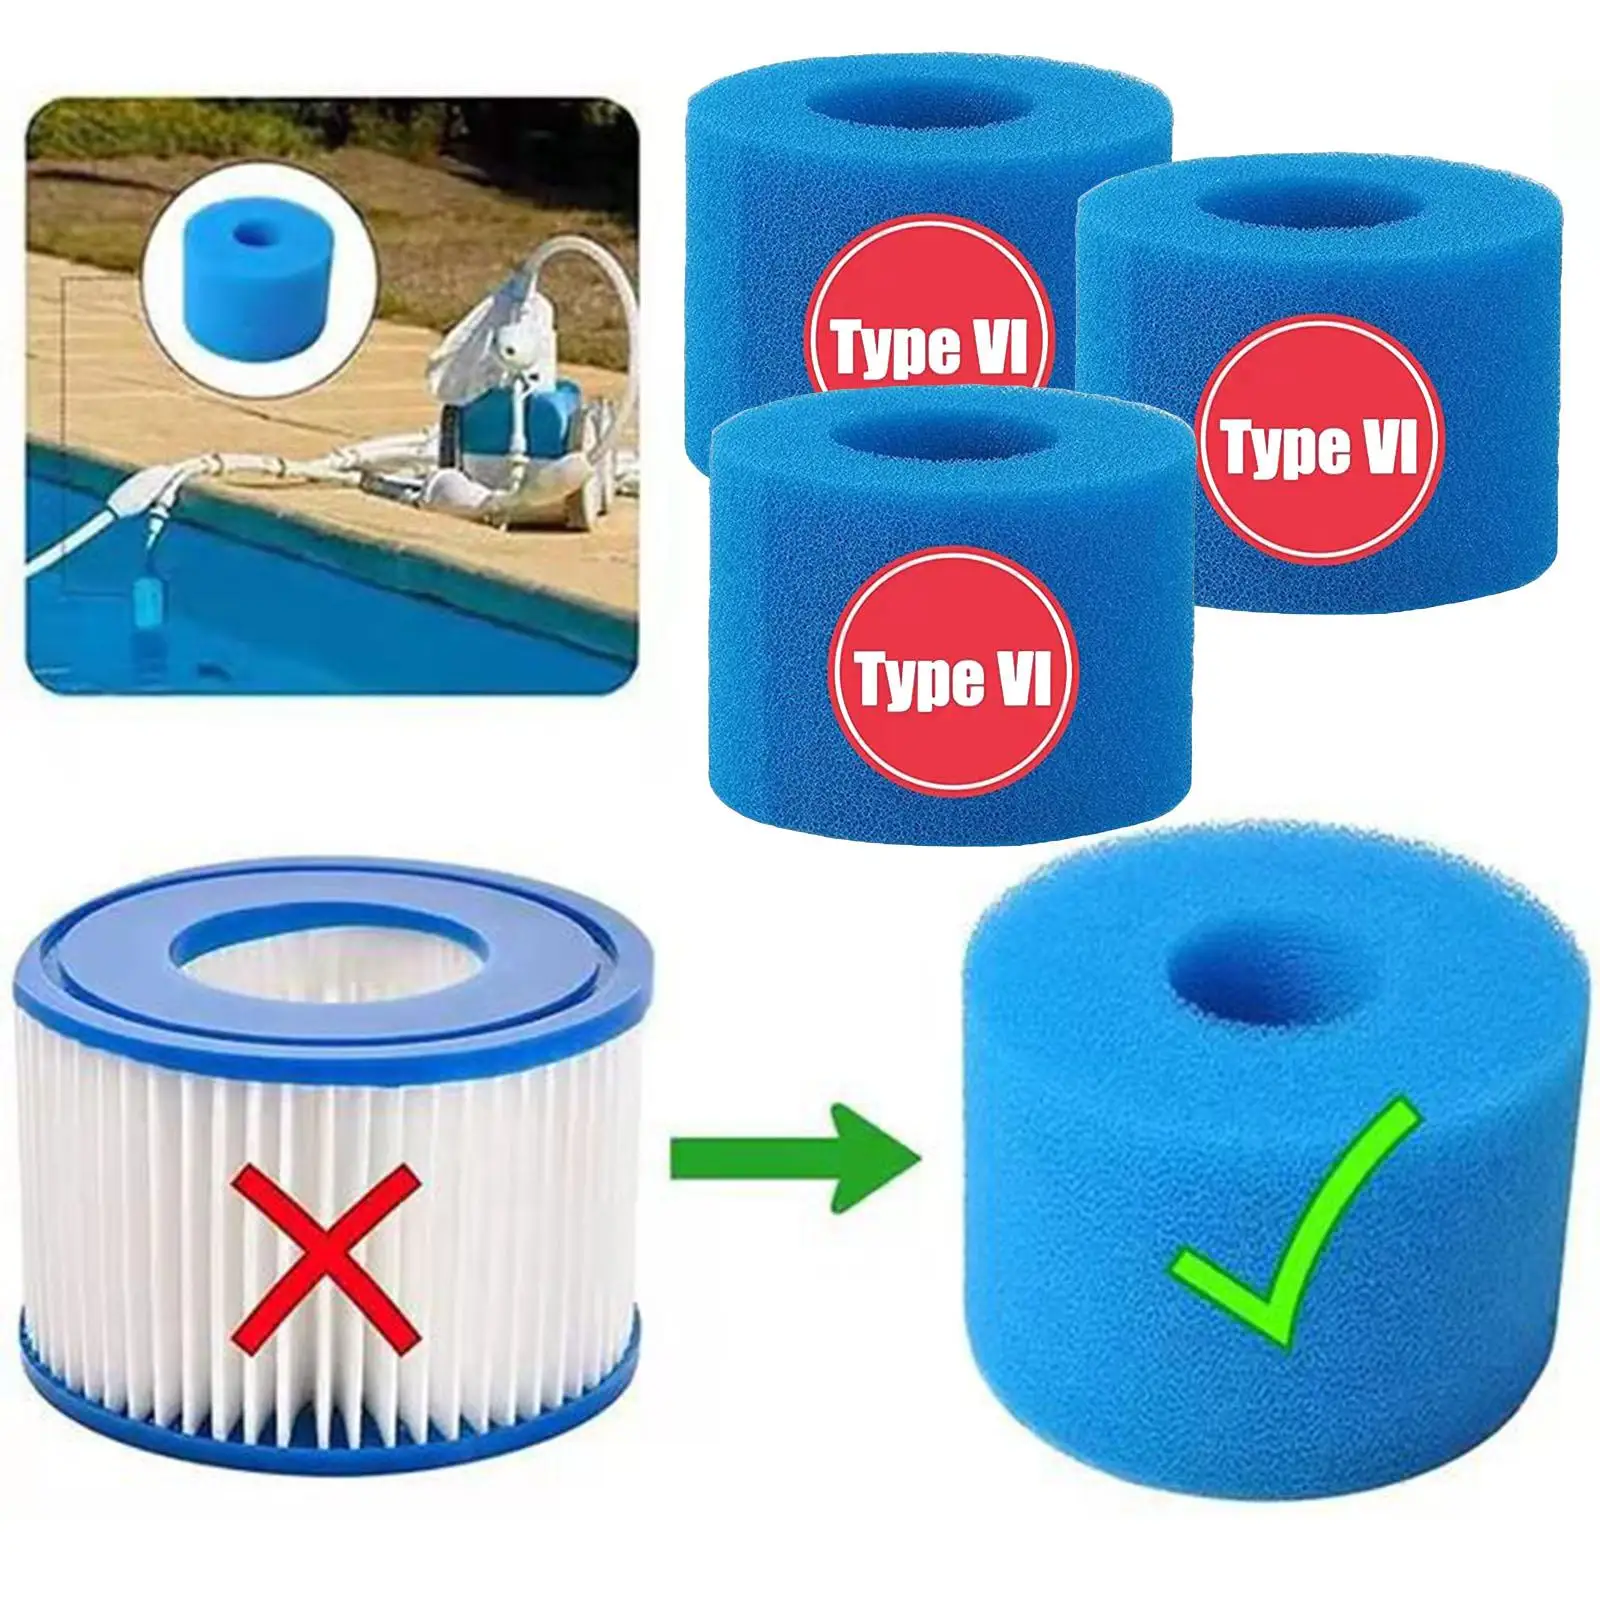 3Pcs Pool Filter Sponge Pool Cleaner Foam Replacement for Type V1 Equipment